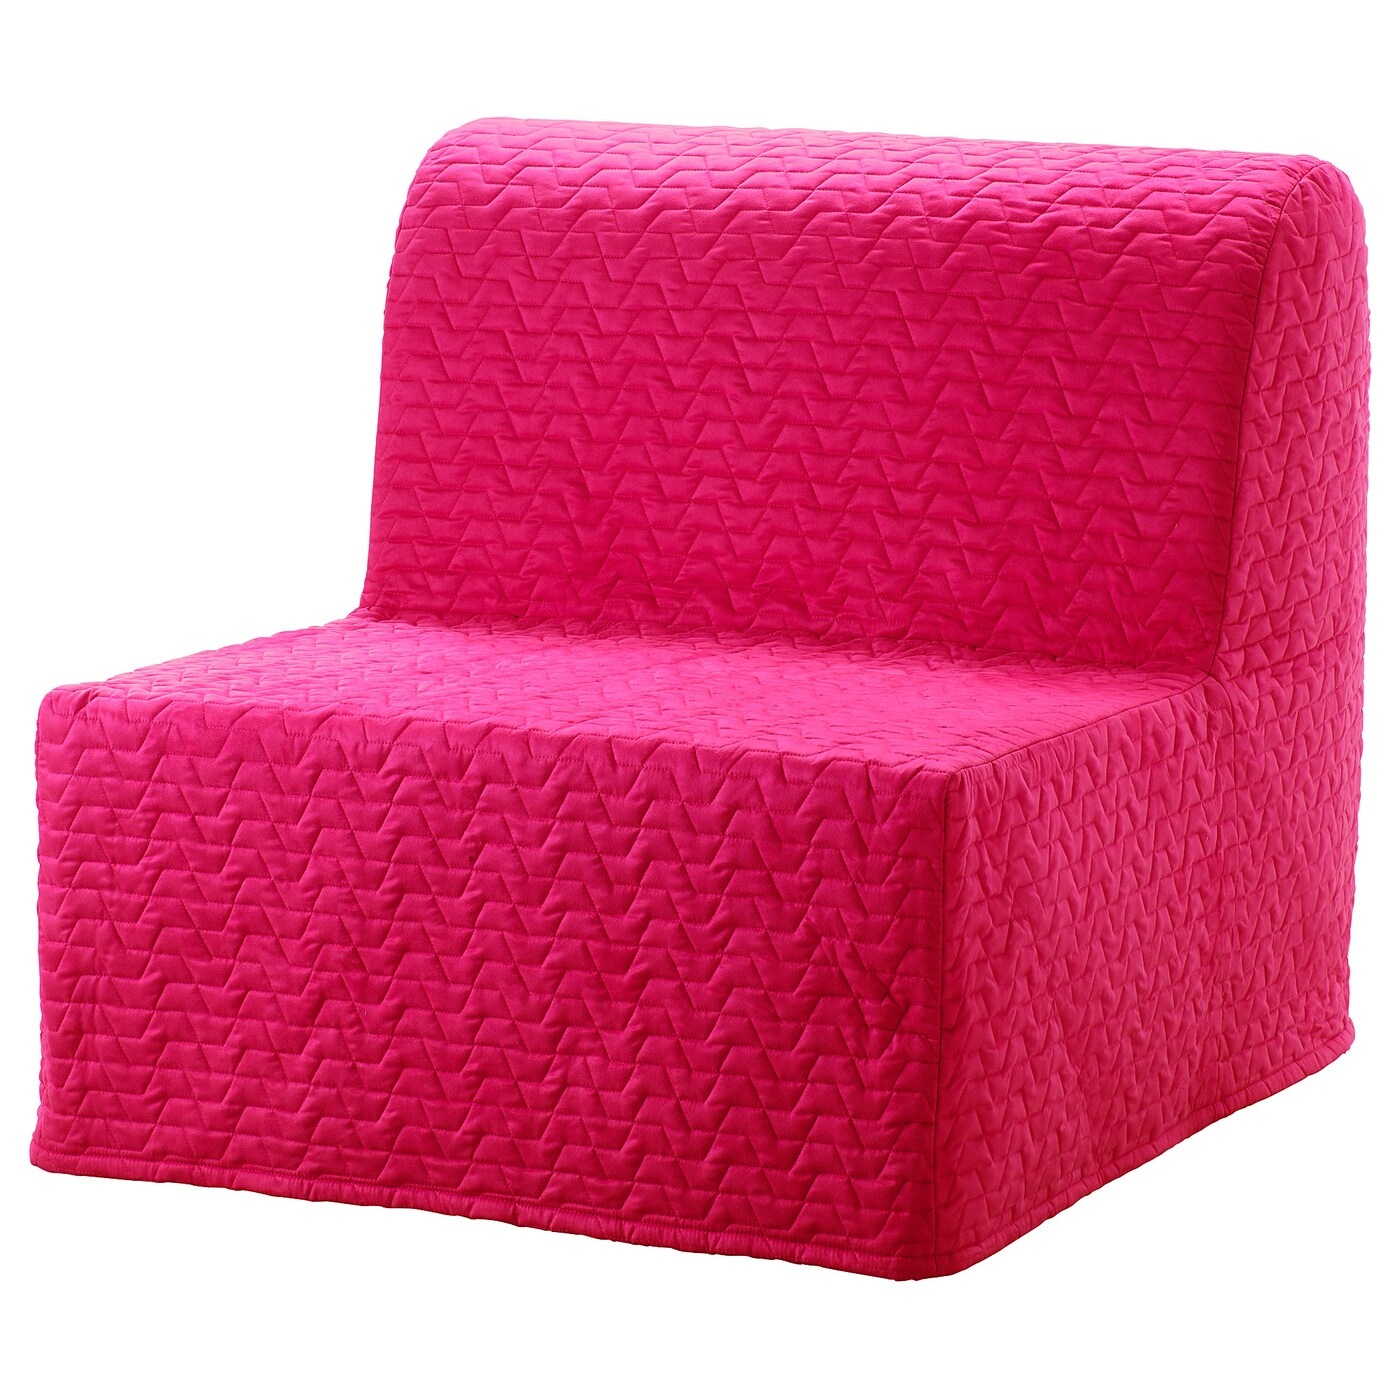 Lycksele Lövås Bettsessel - Vallarum Pink pour Chauffeuse Ikea